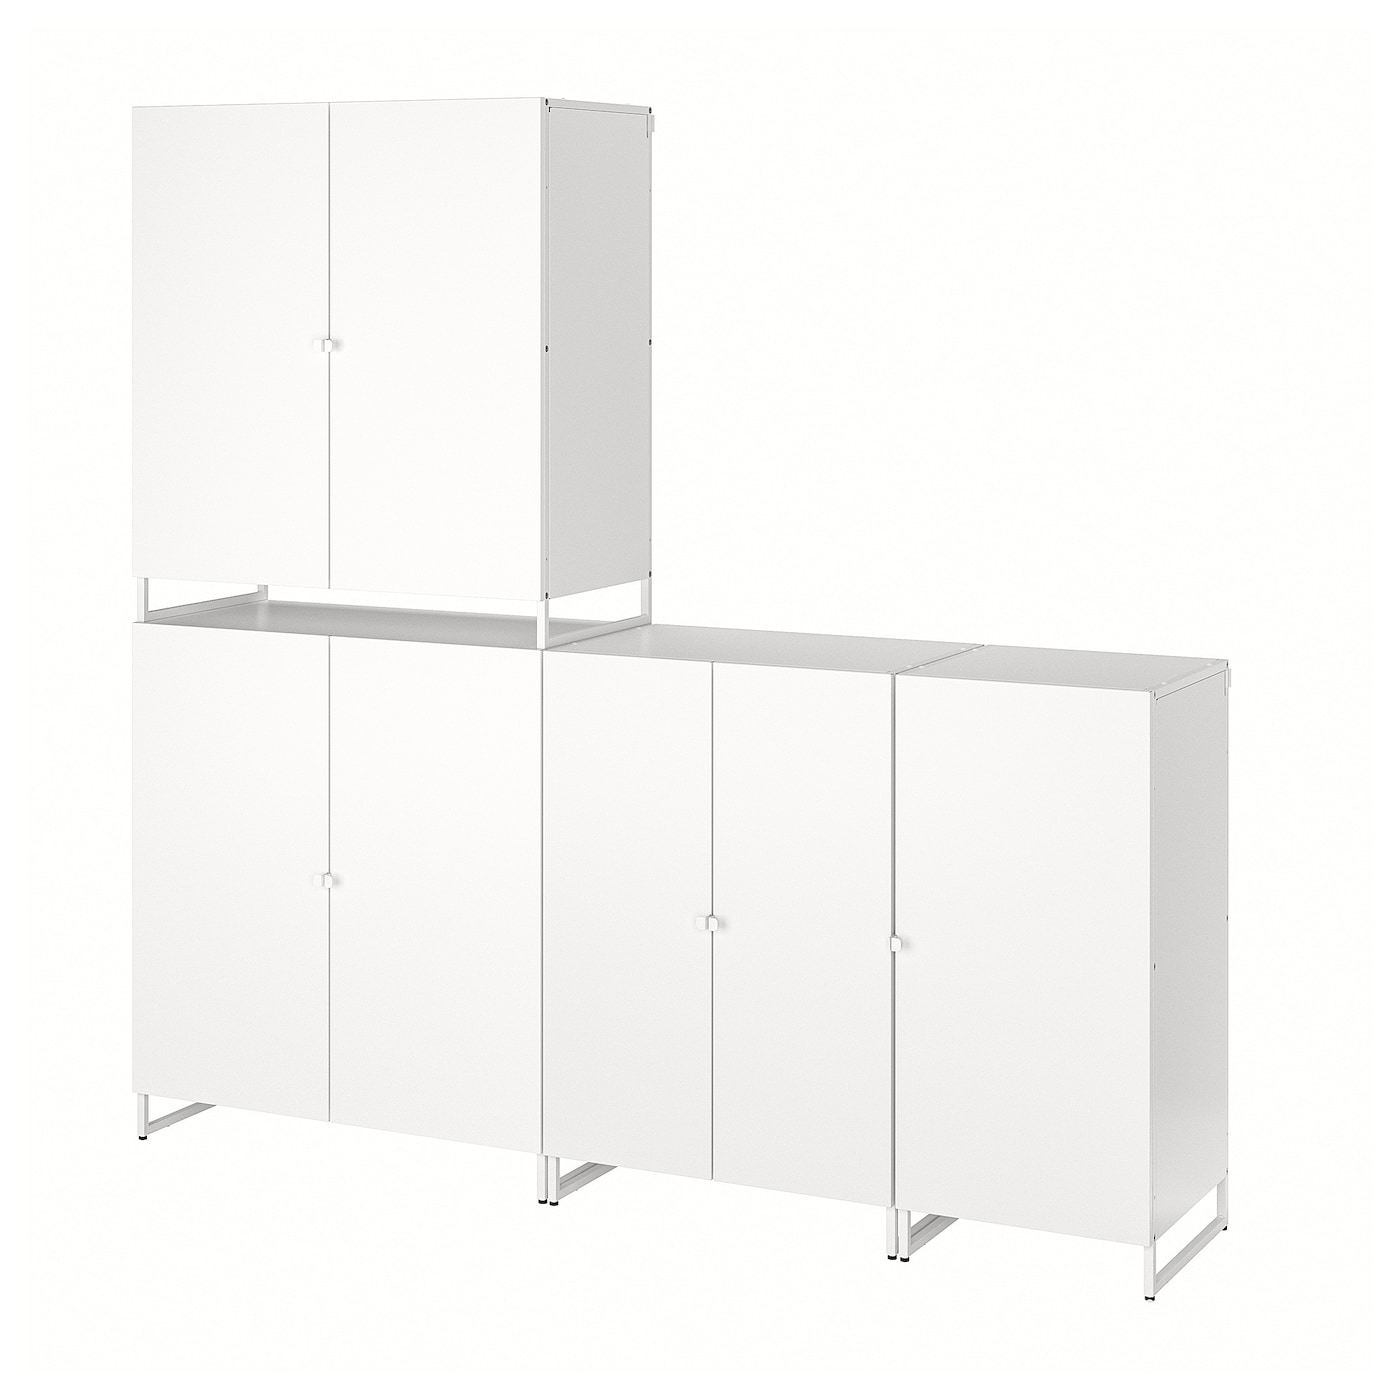 Книжный шкаф - JOSTEIN IKEA/ ЙОСТЕЙН ИКЕА,  182х180 см, белый